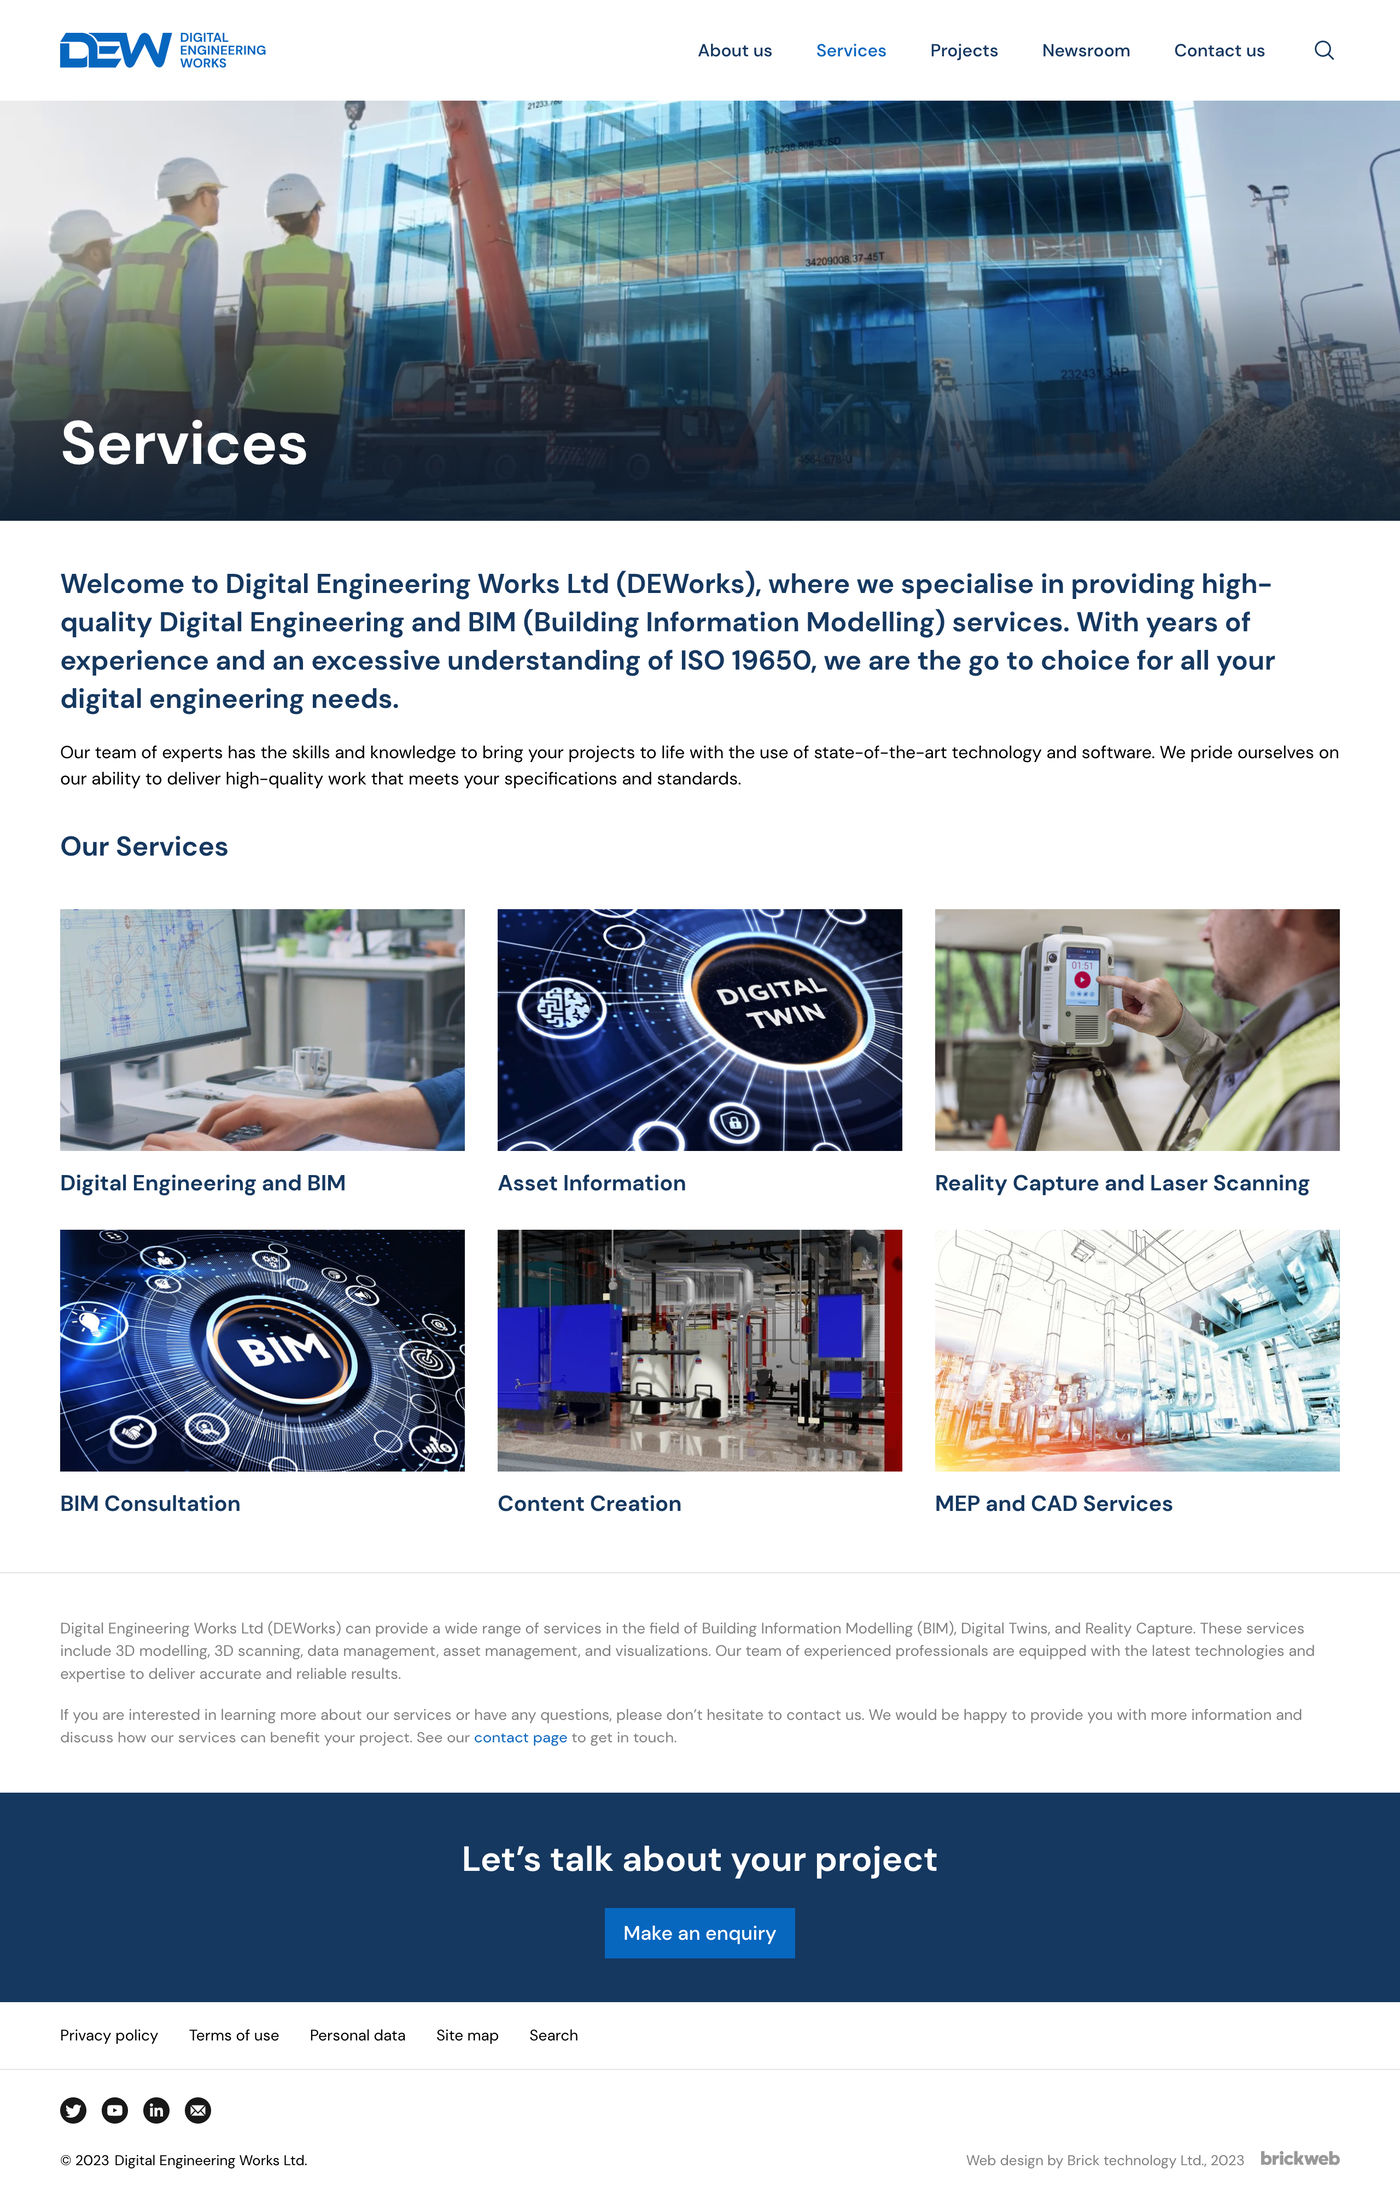 Digital Engineering Works Services